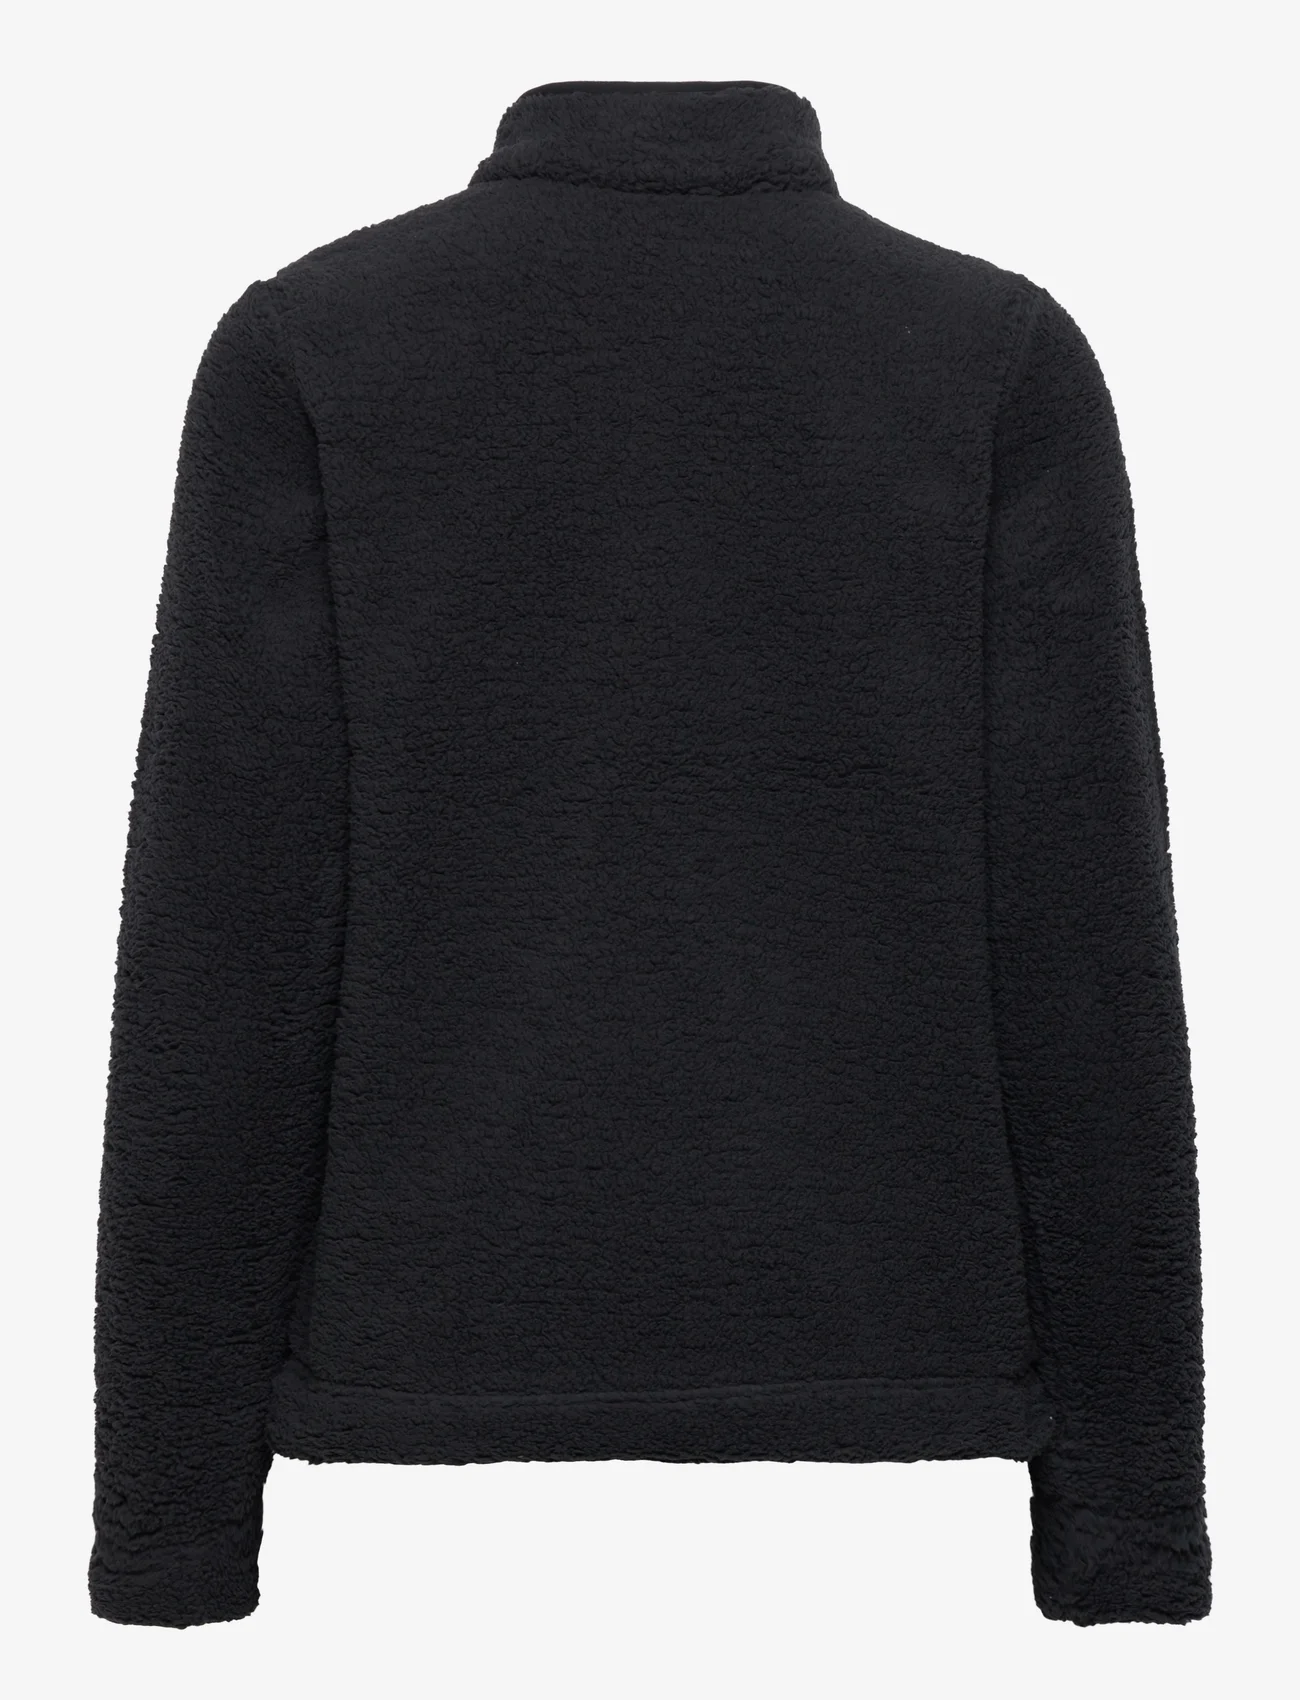 Columbia Sportswear - West Bend 1/4 Zip Pullover - midlayer-jakker - black, black - 1